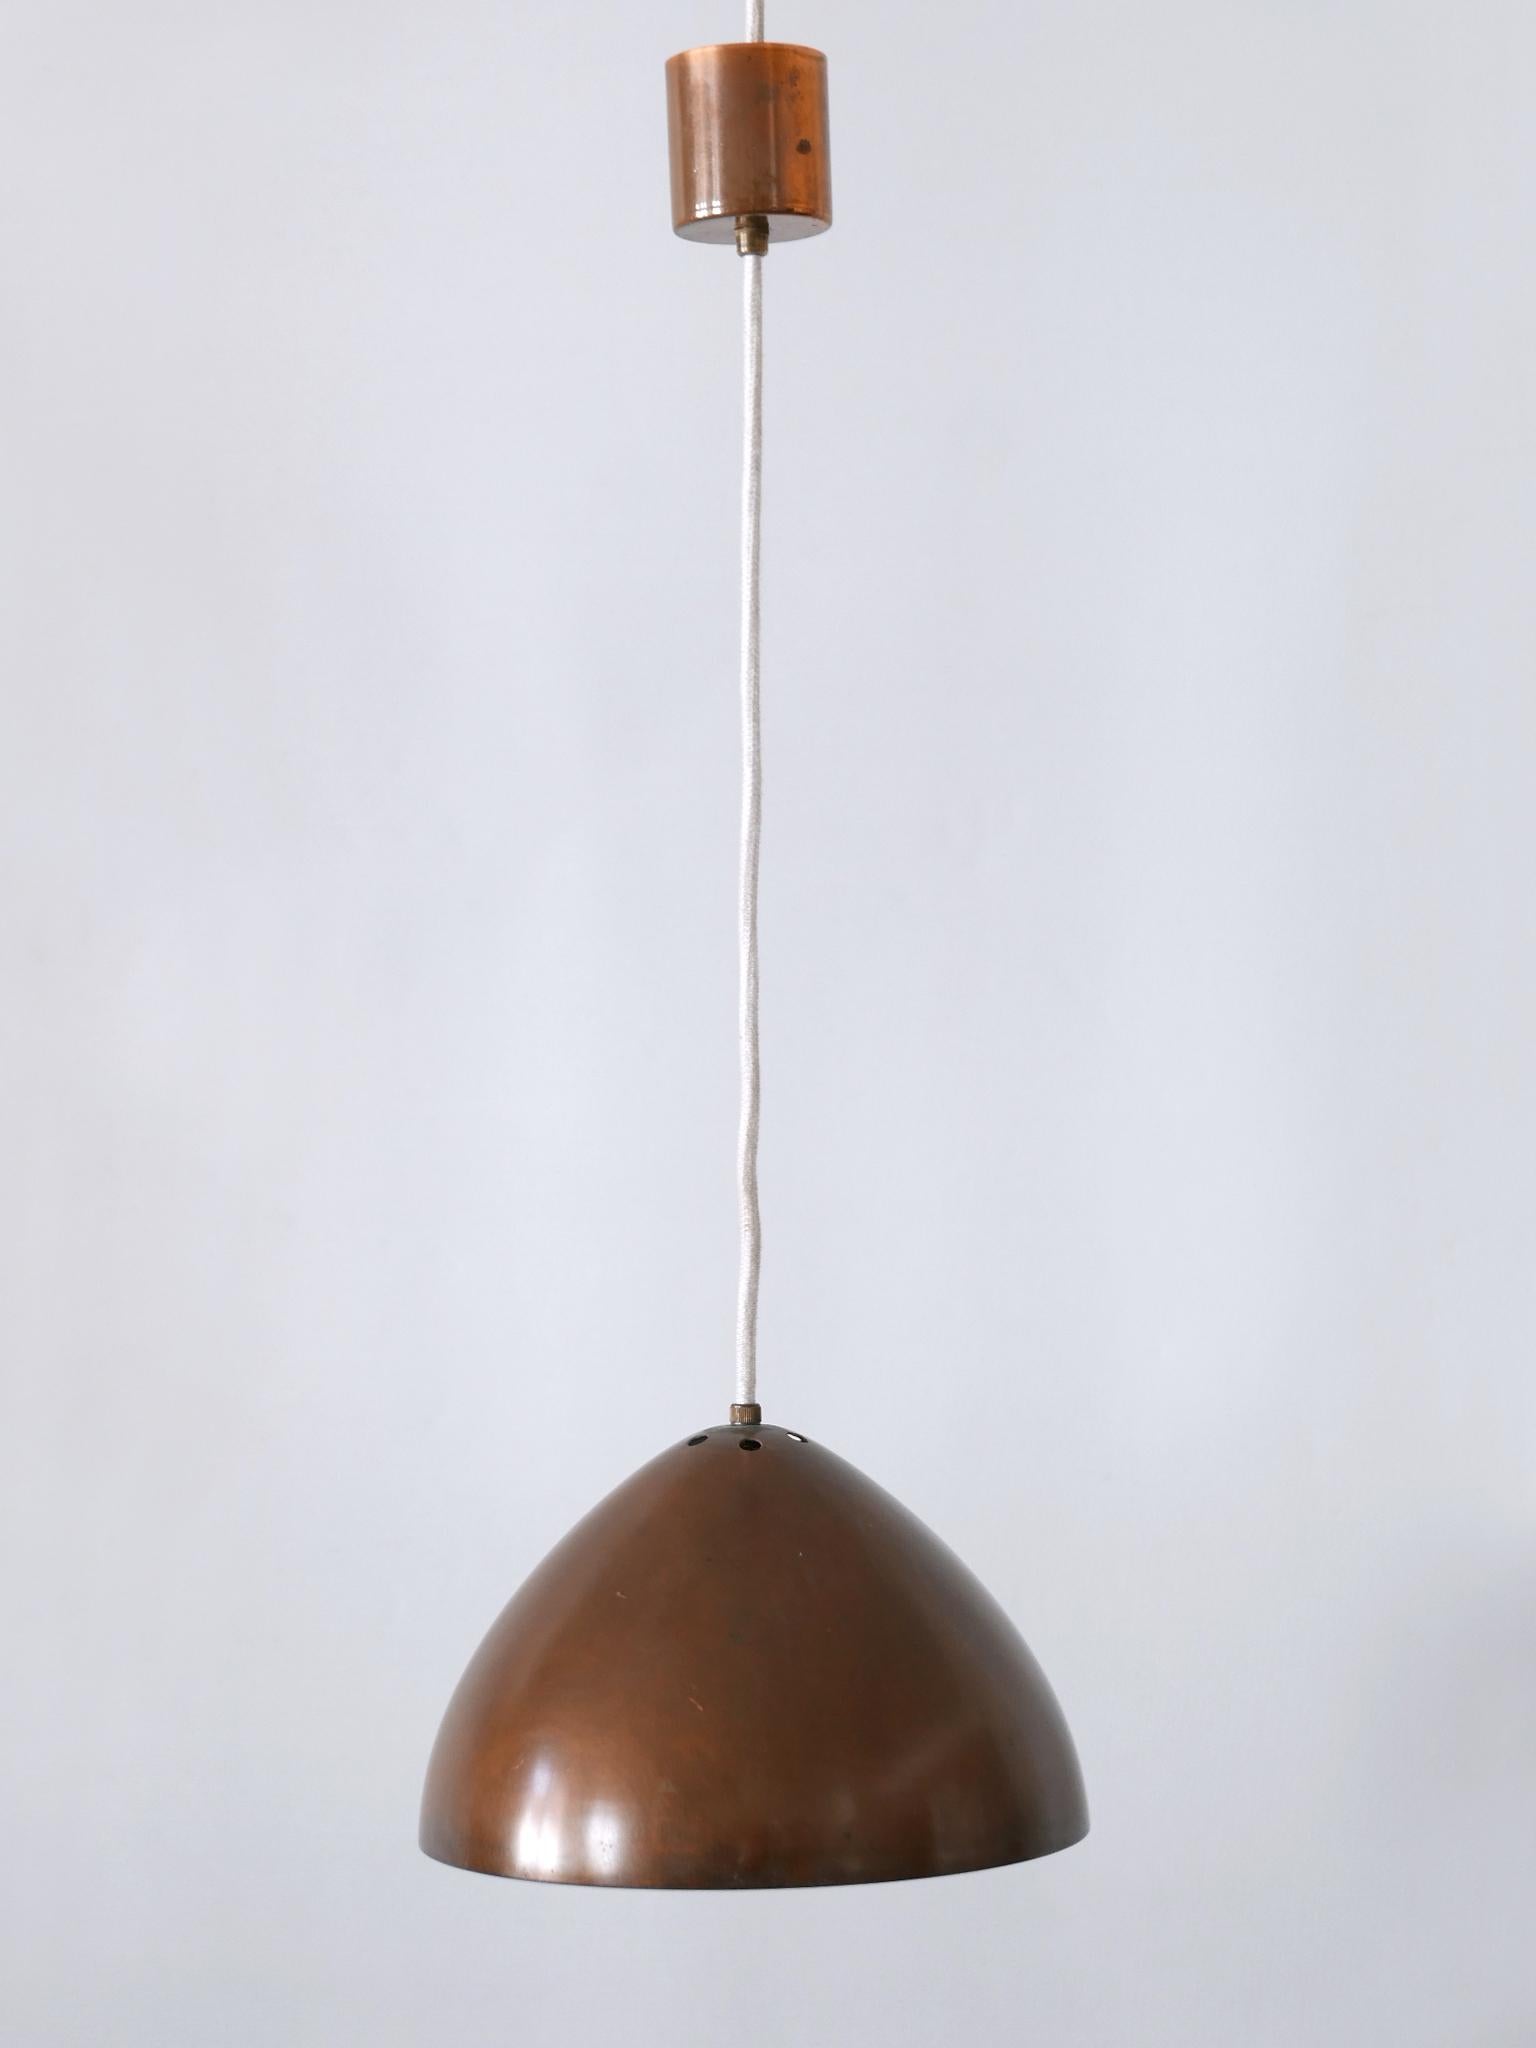 Exceptional & Elegant Mid Century Modern Copper Pendant Lamp Finland 1950s For Sale 4